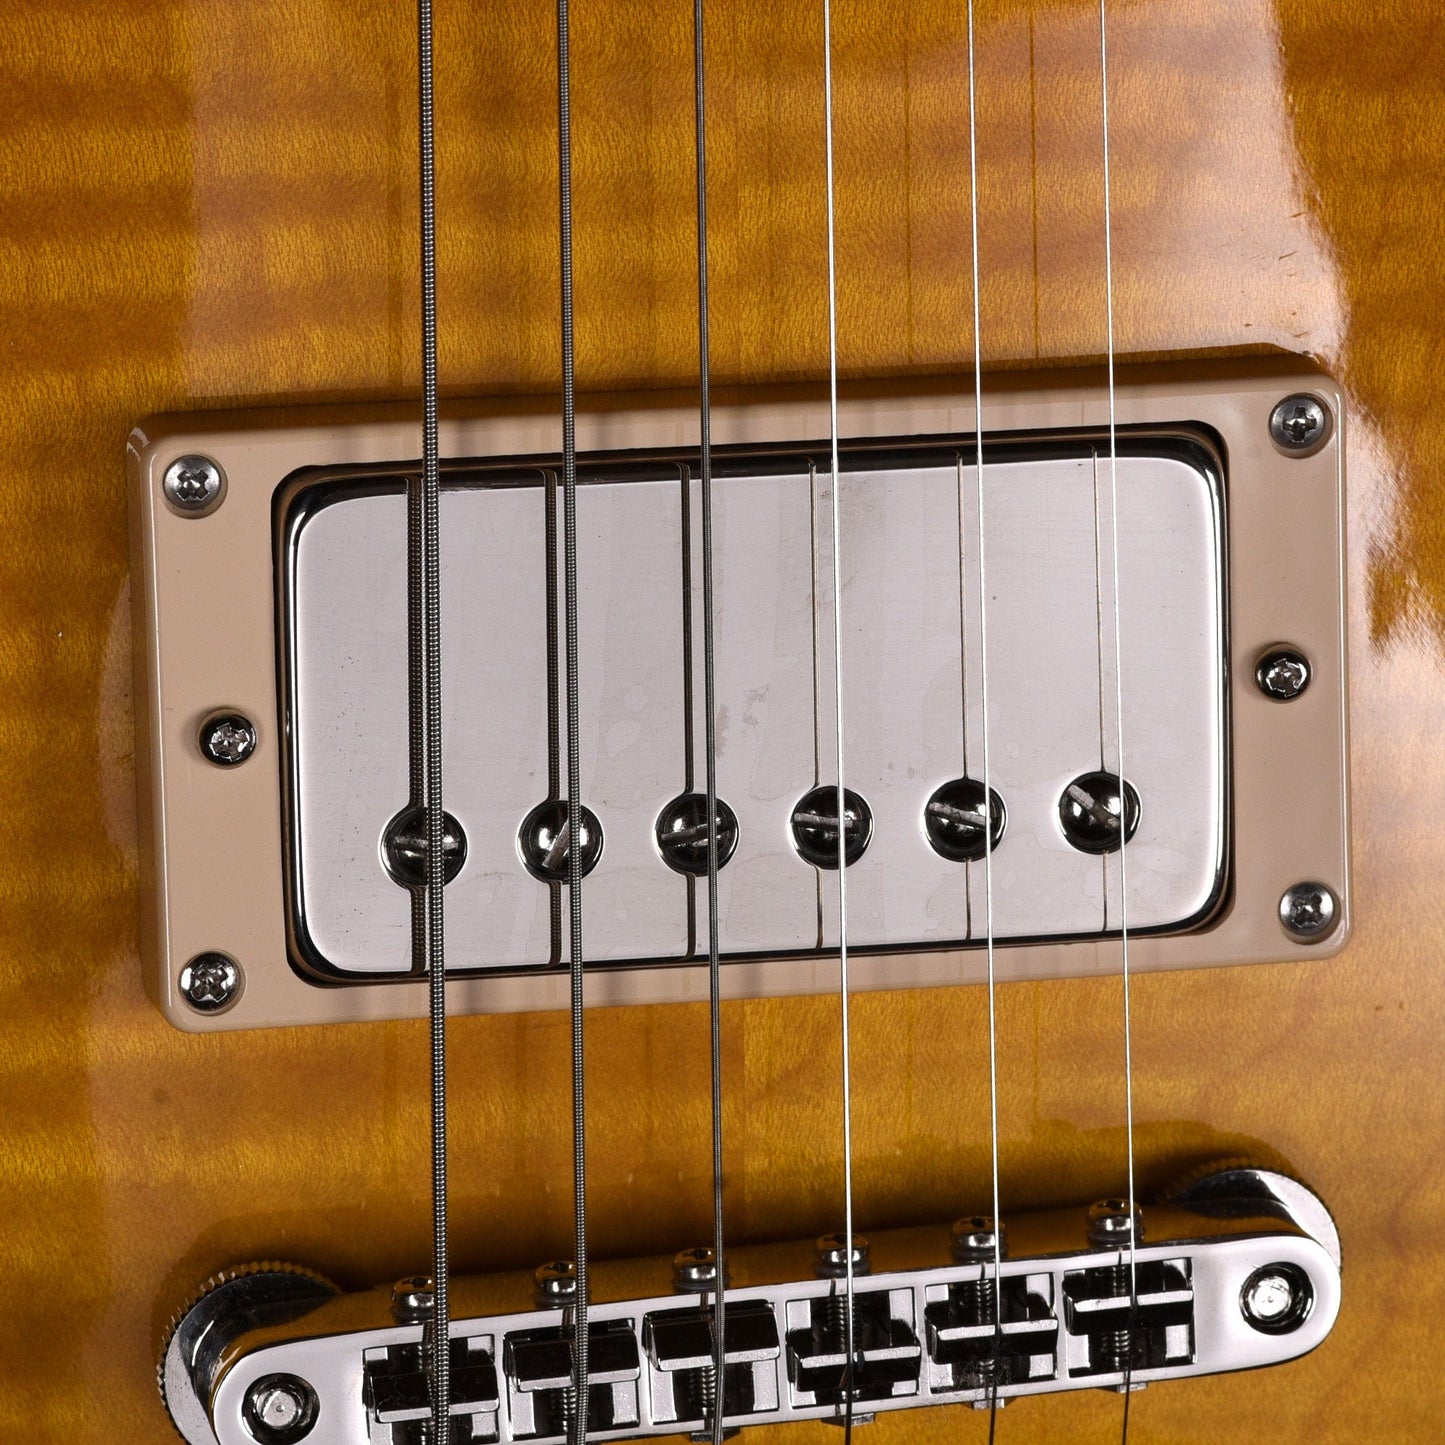 Eastman Romeo California Goldburst Electric Guitars / Solid Body